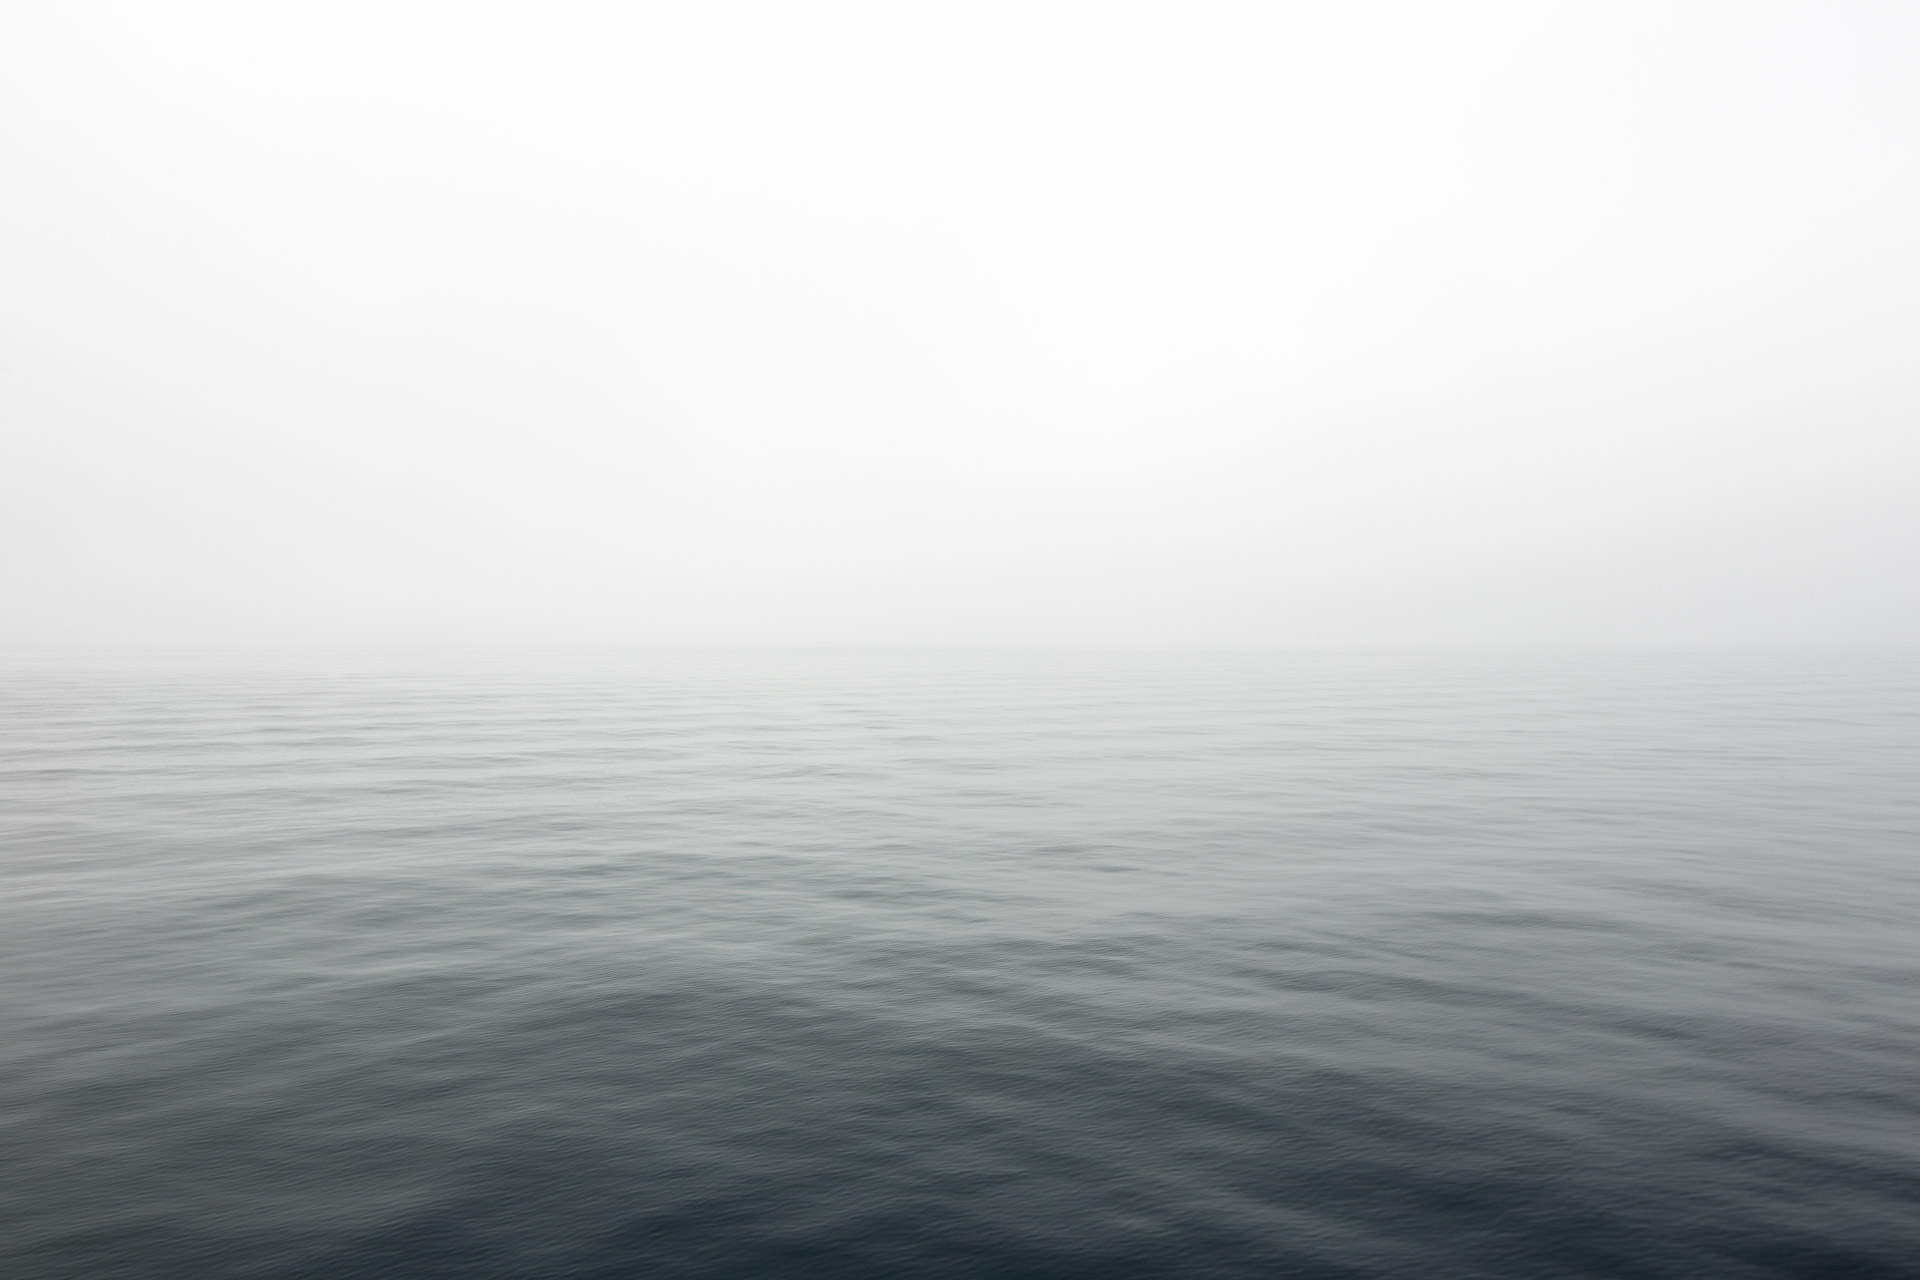 Foggy Straits of Mackinac. Photo by Jason R. Woods.